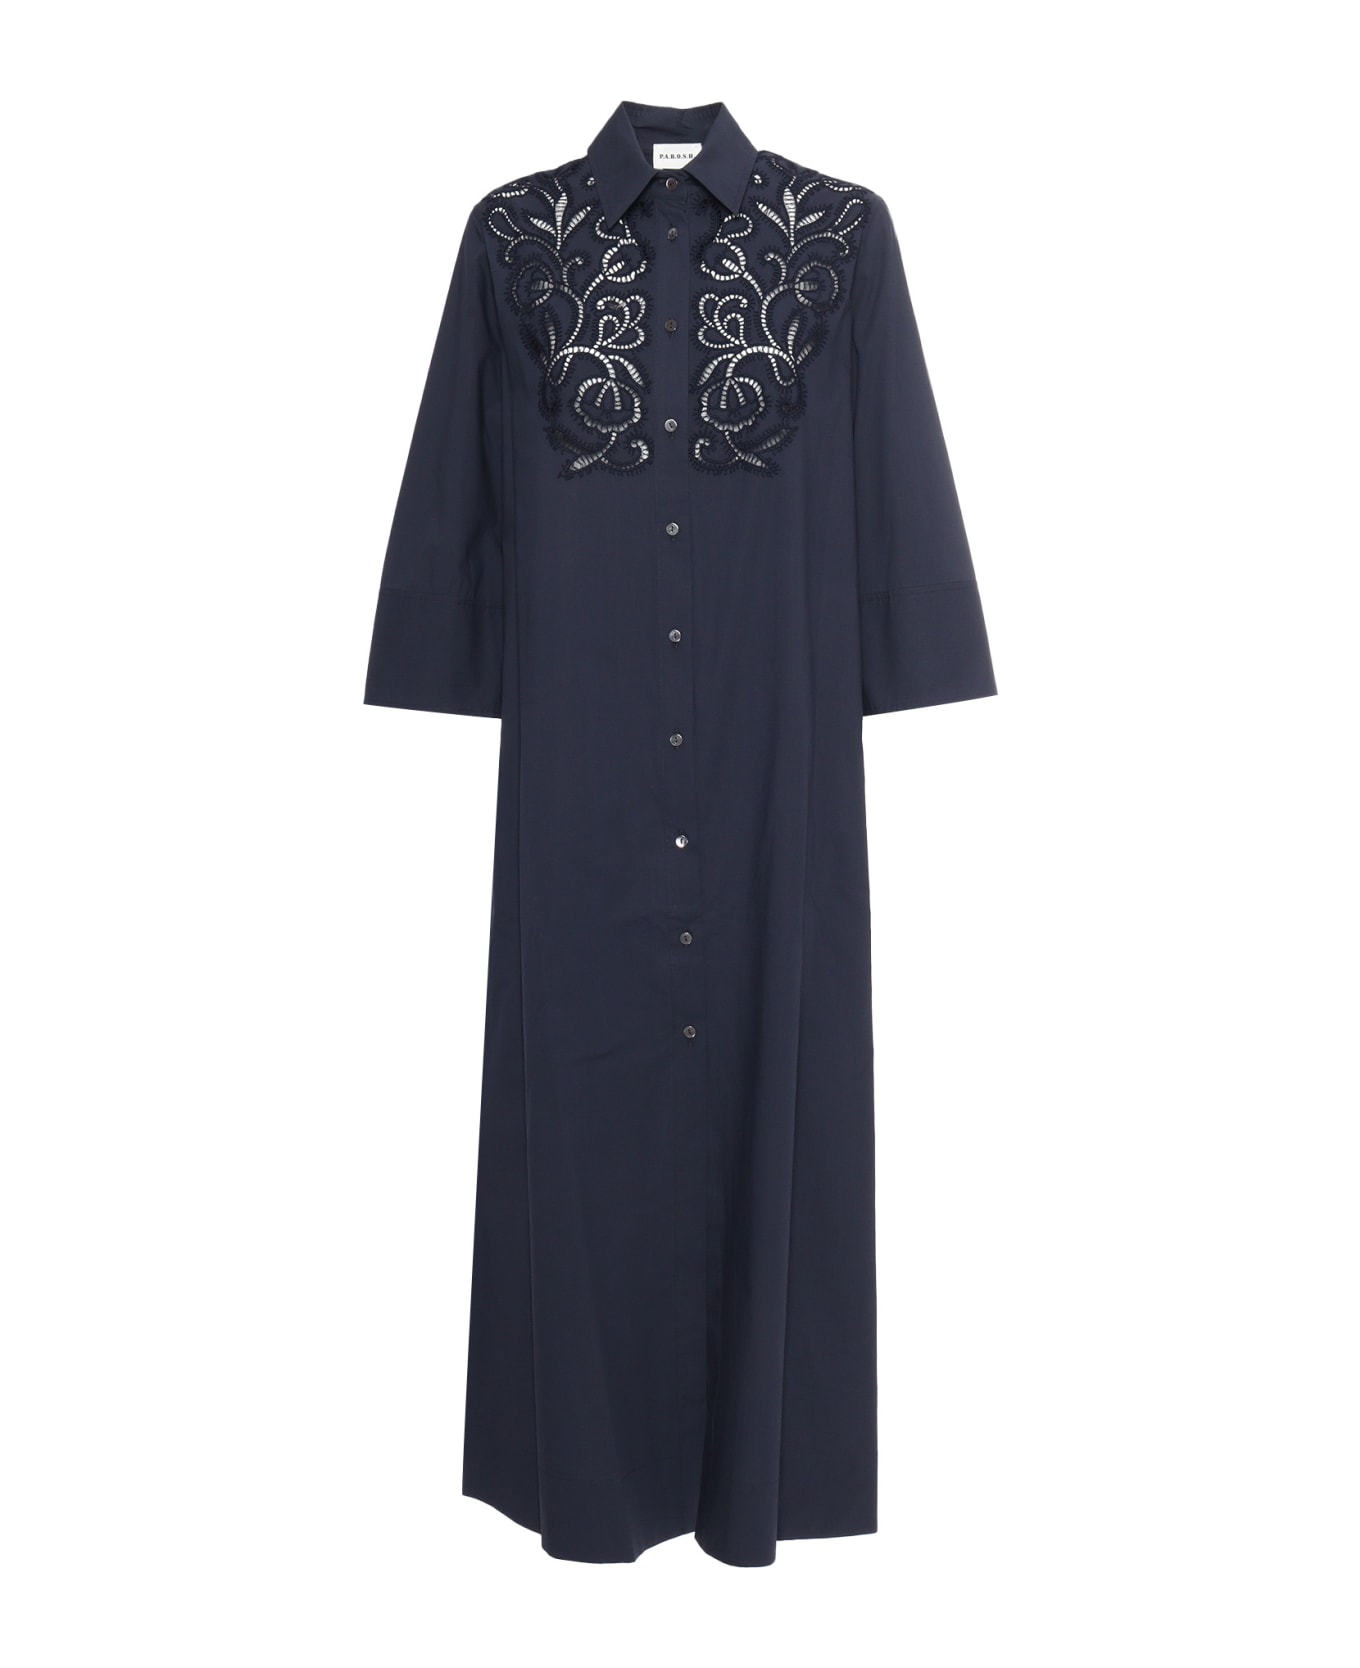 Parosh Shirt Dress With Openwork Lace - BLUE